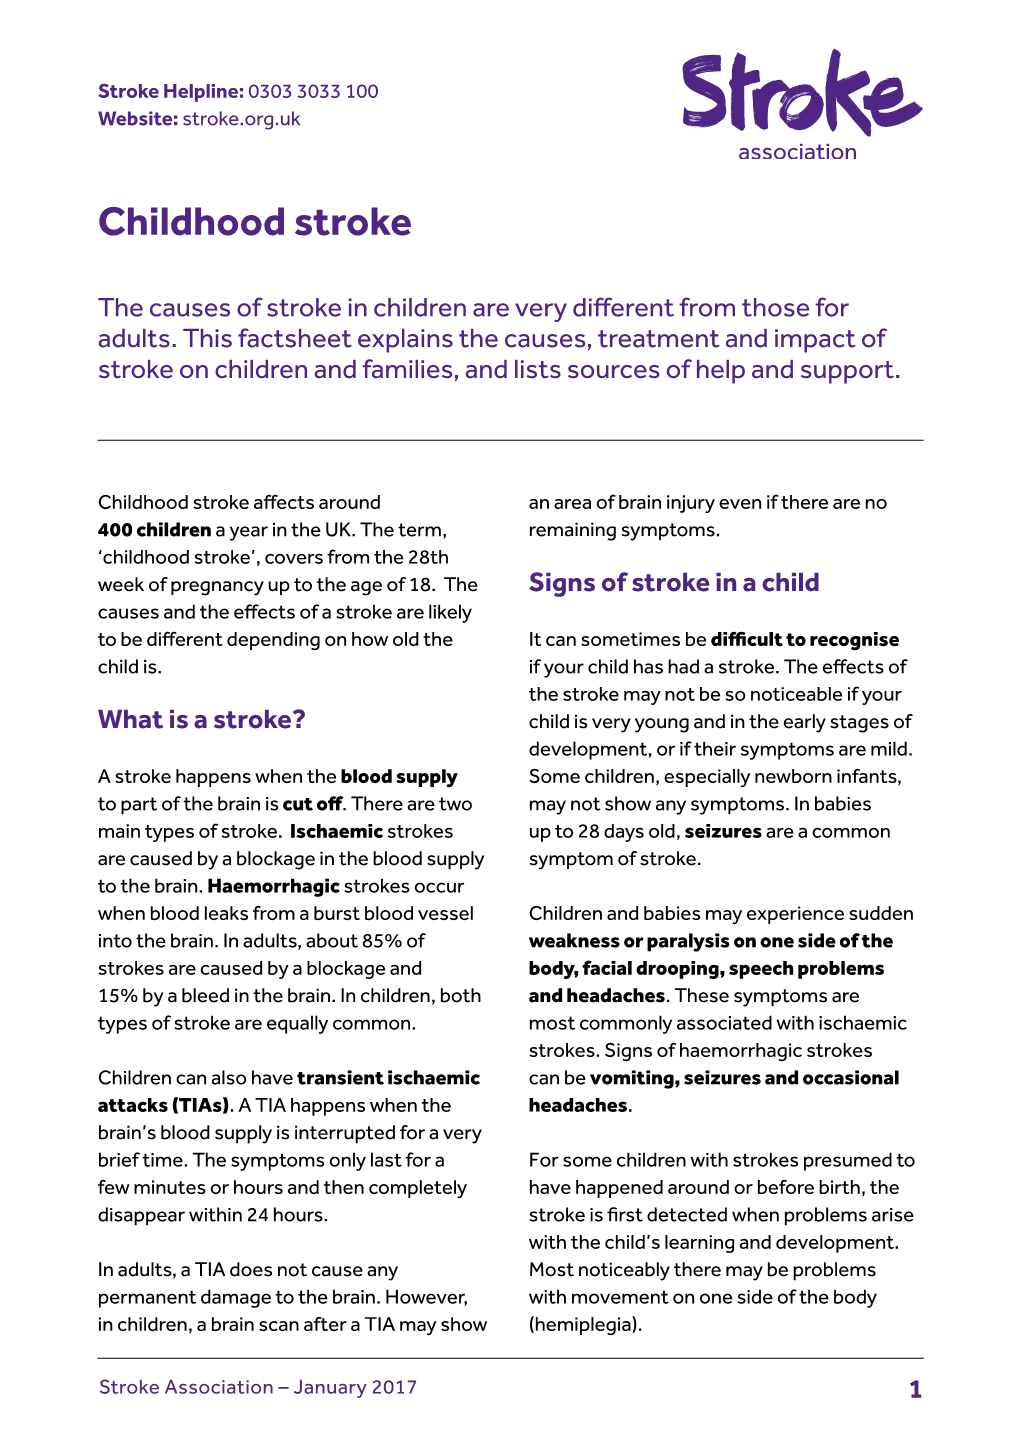 Childhood Stroke Guide